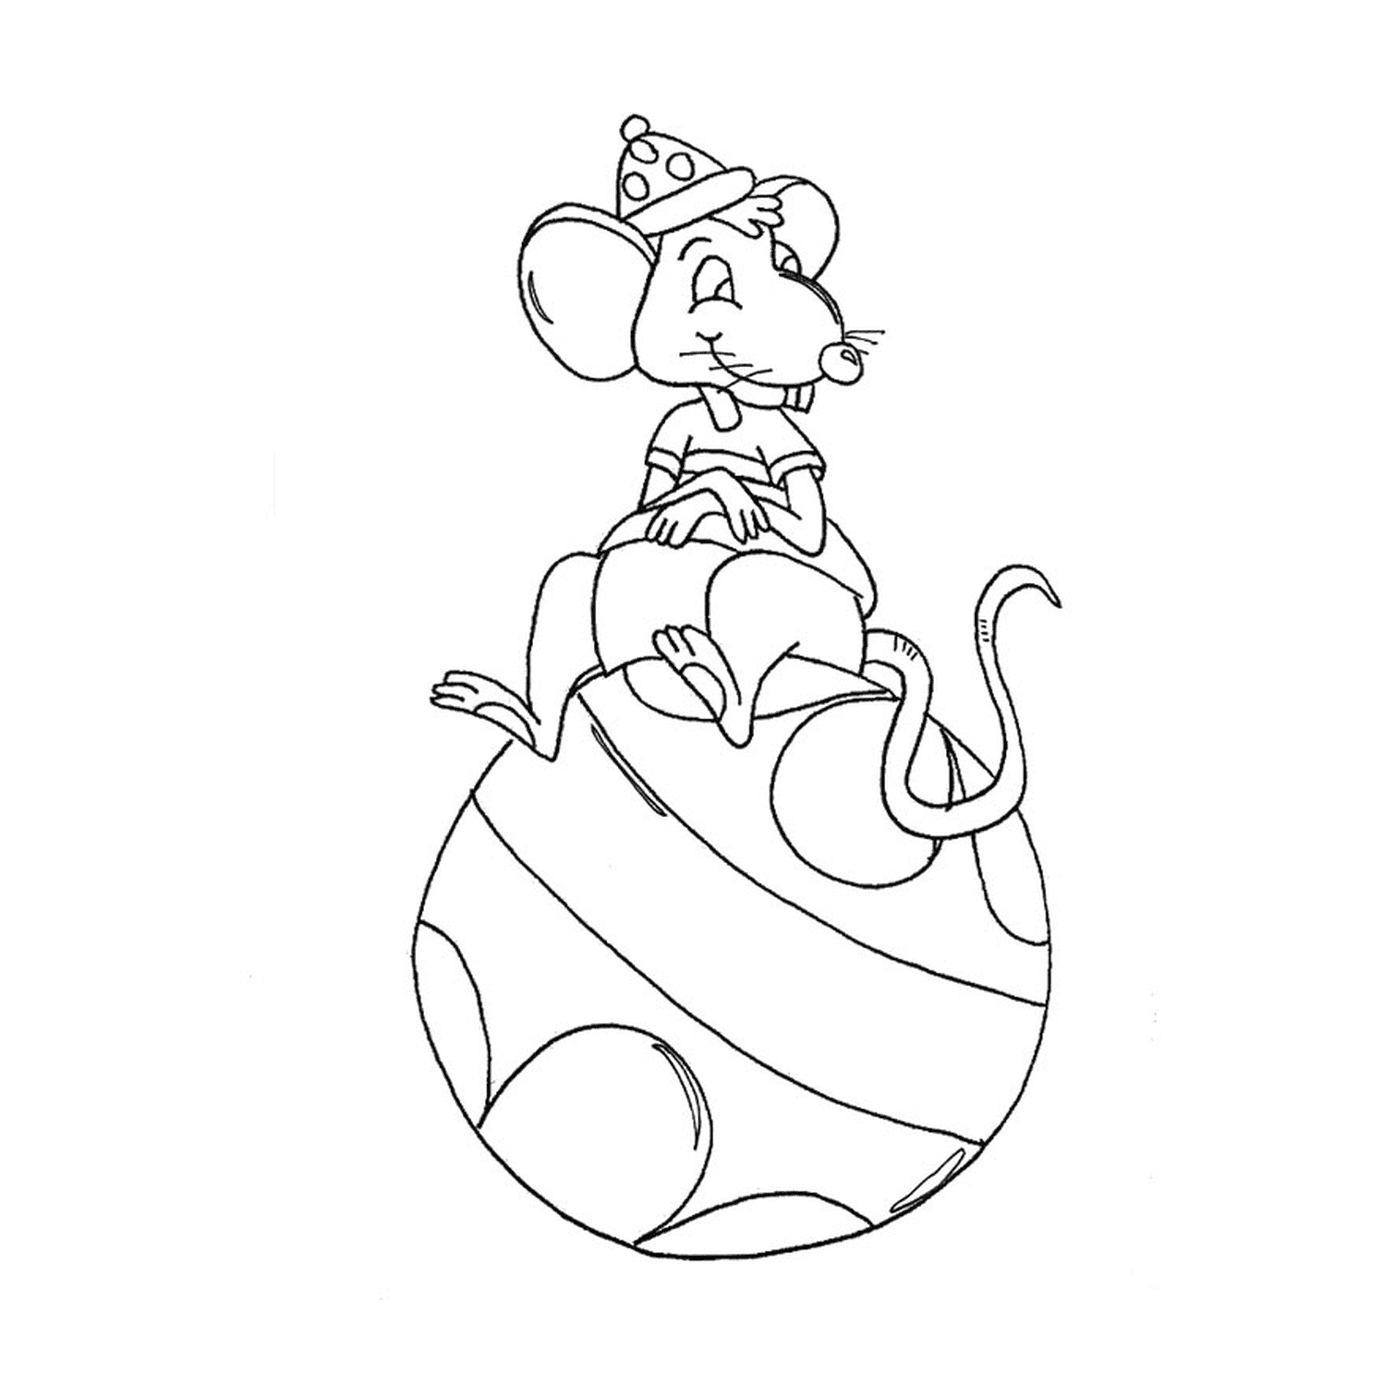  Un topo seduto su un palloncino 